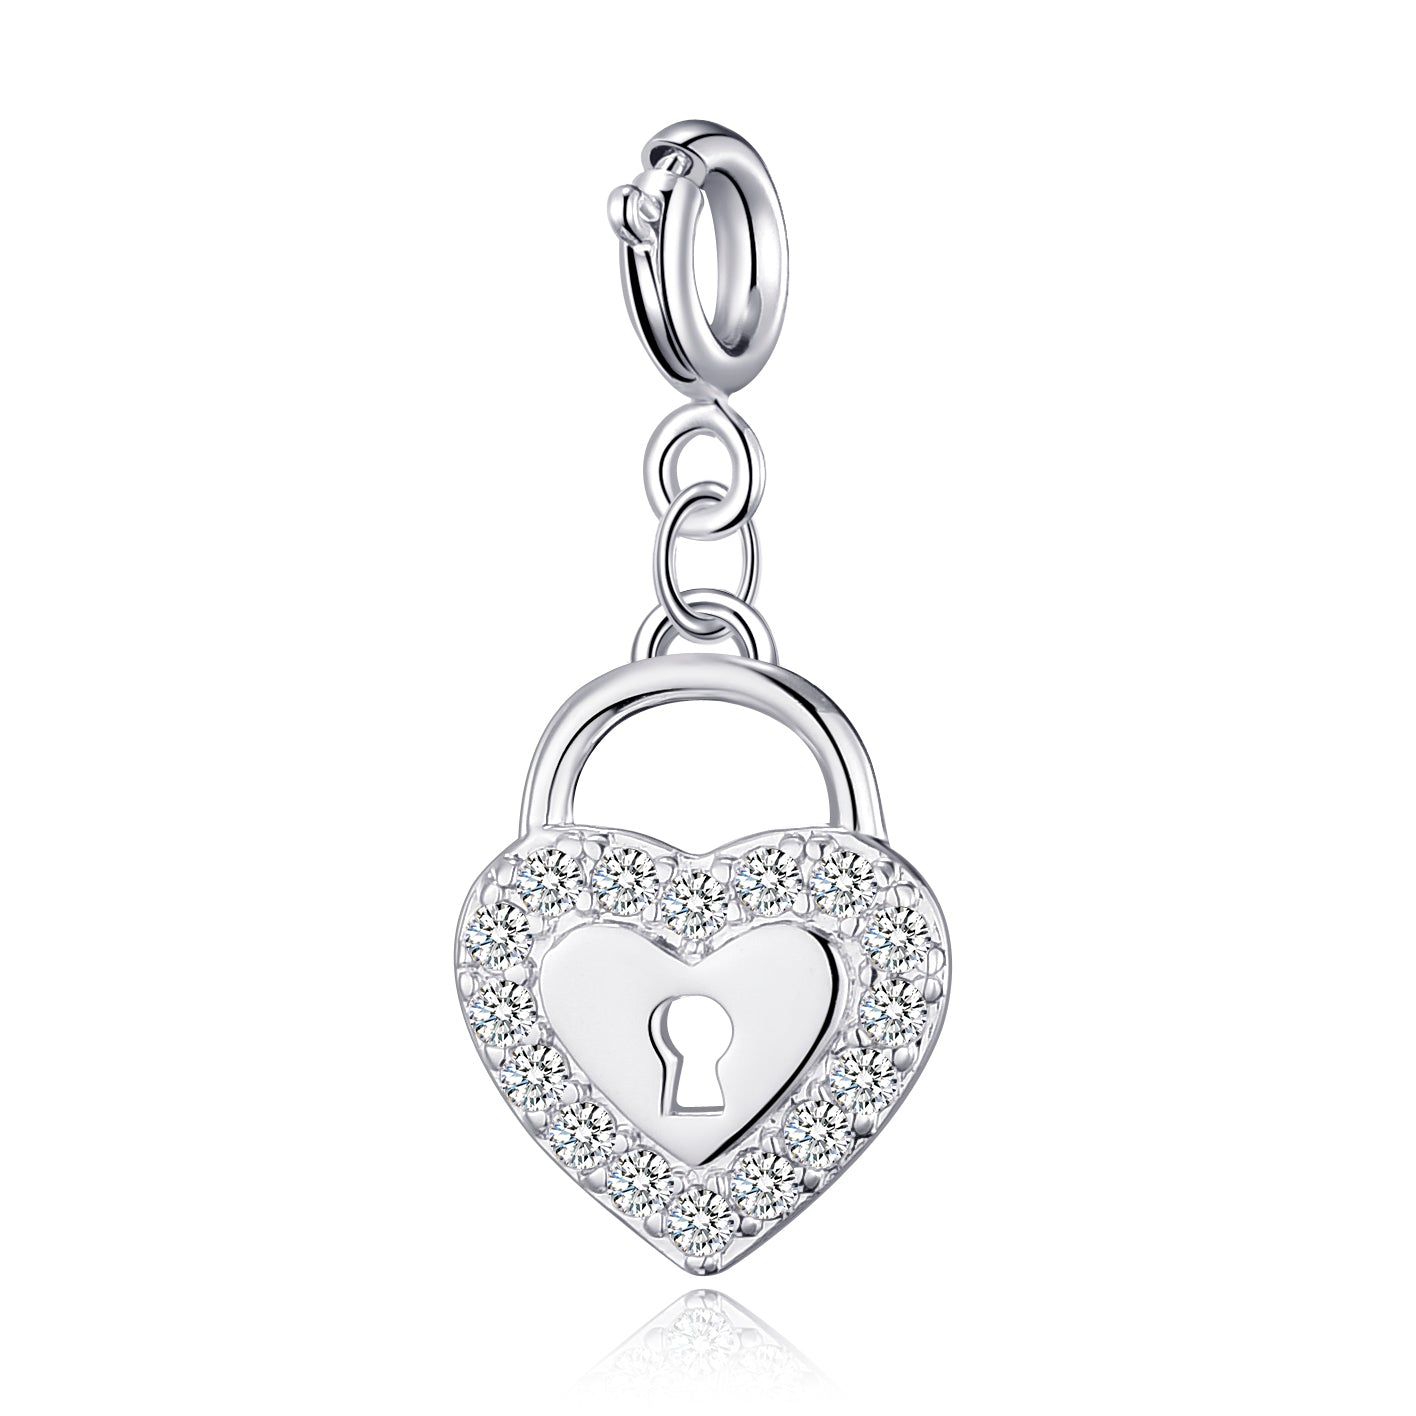 Heart Lock Charm Created with Zircondia® Crystals by Philip Jones Jewellery